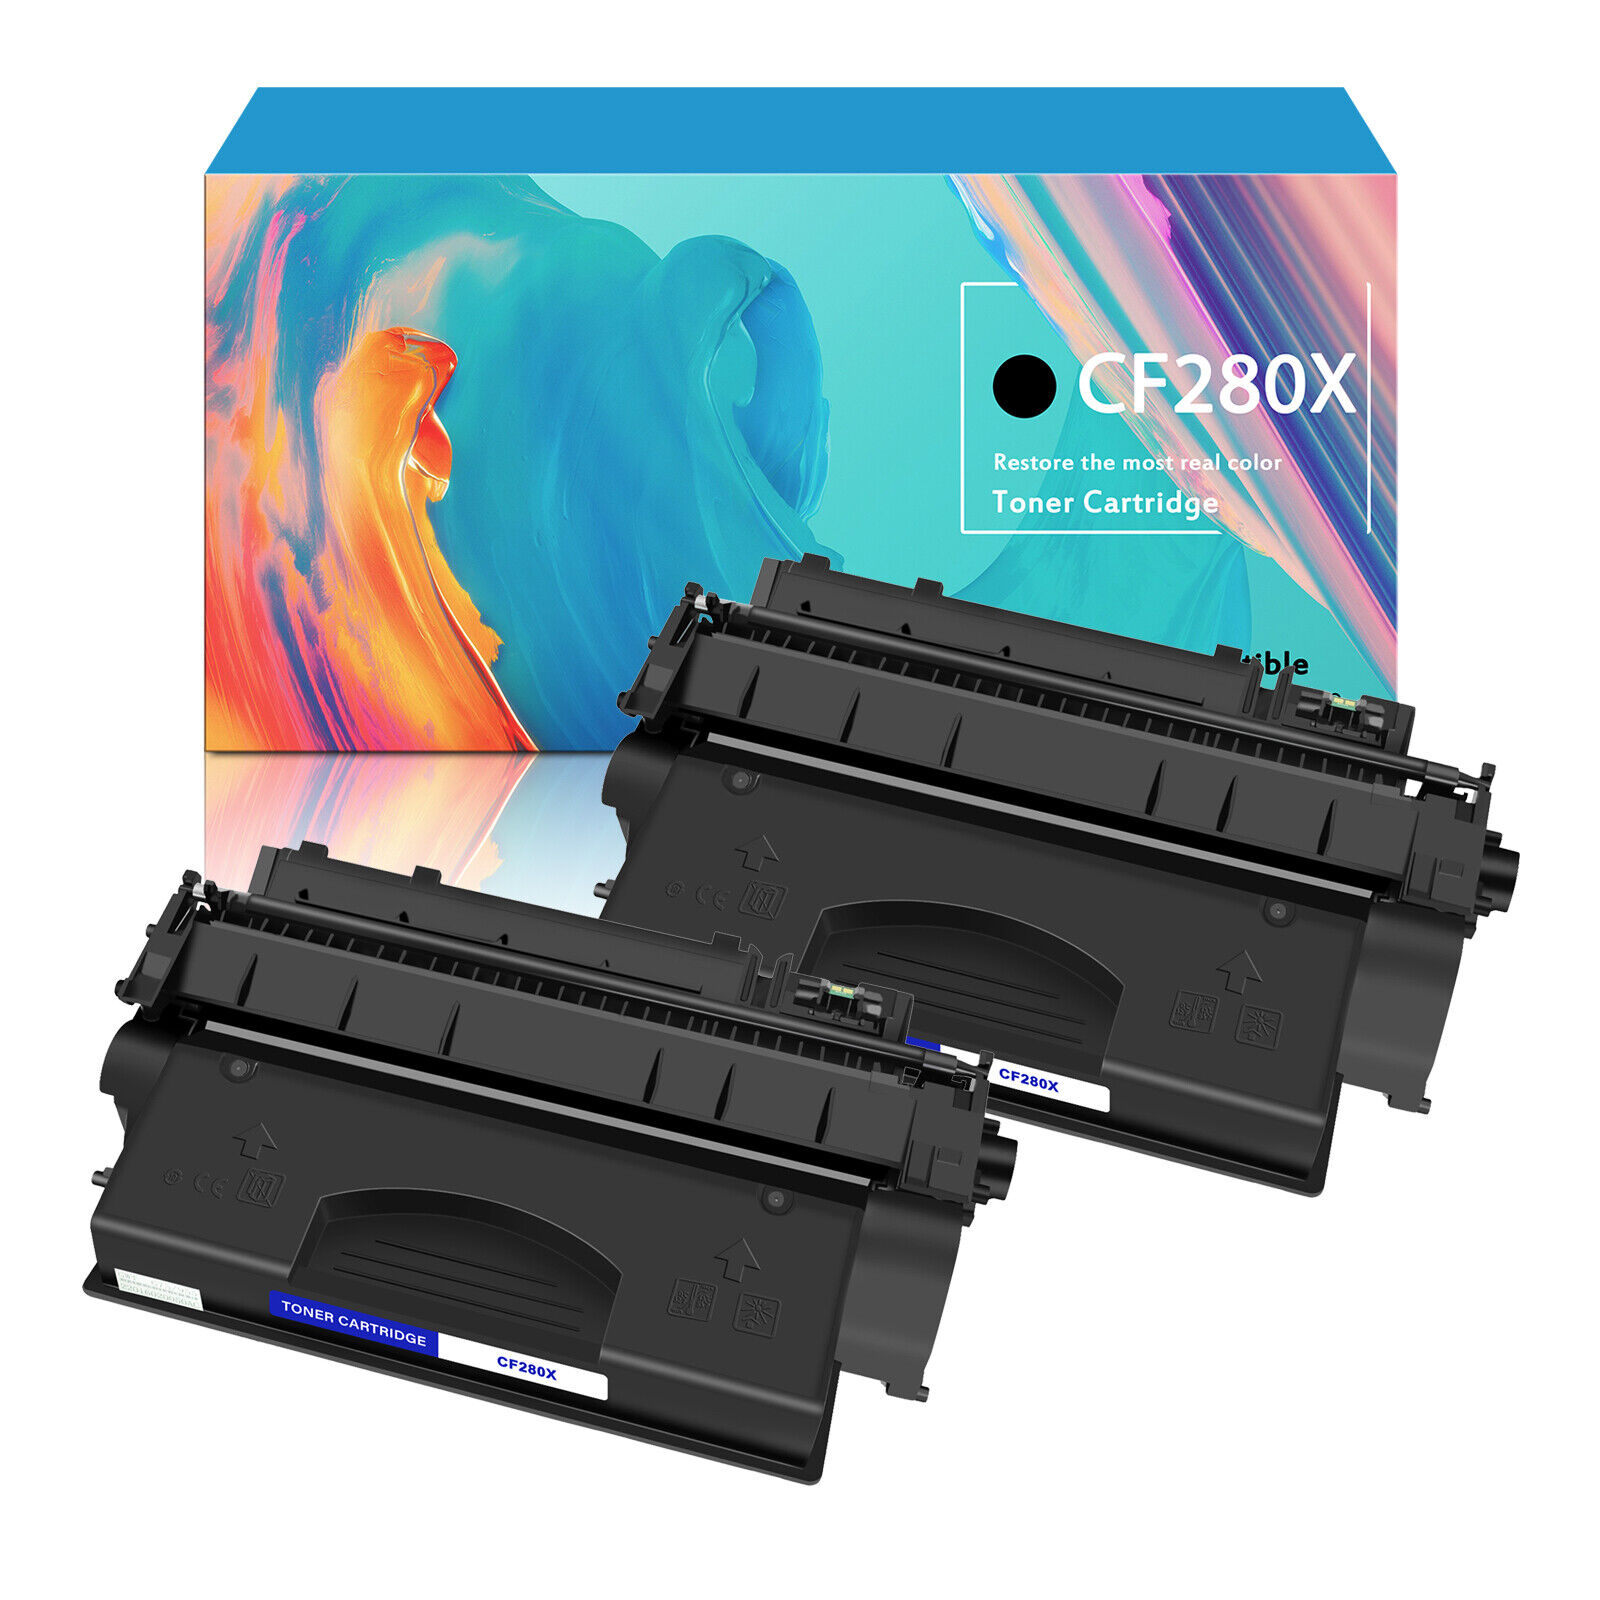 2PK Toner Cartridge for HP CF280X 80X Laserjet Pro 400 MFP M425dn M425dw Printer